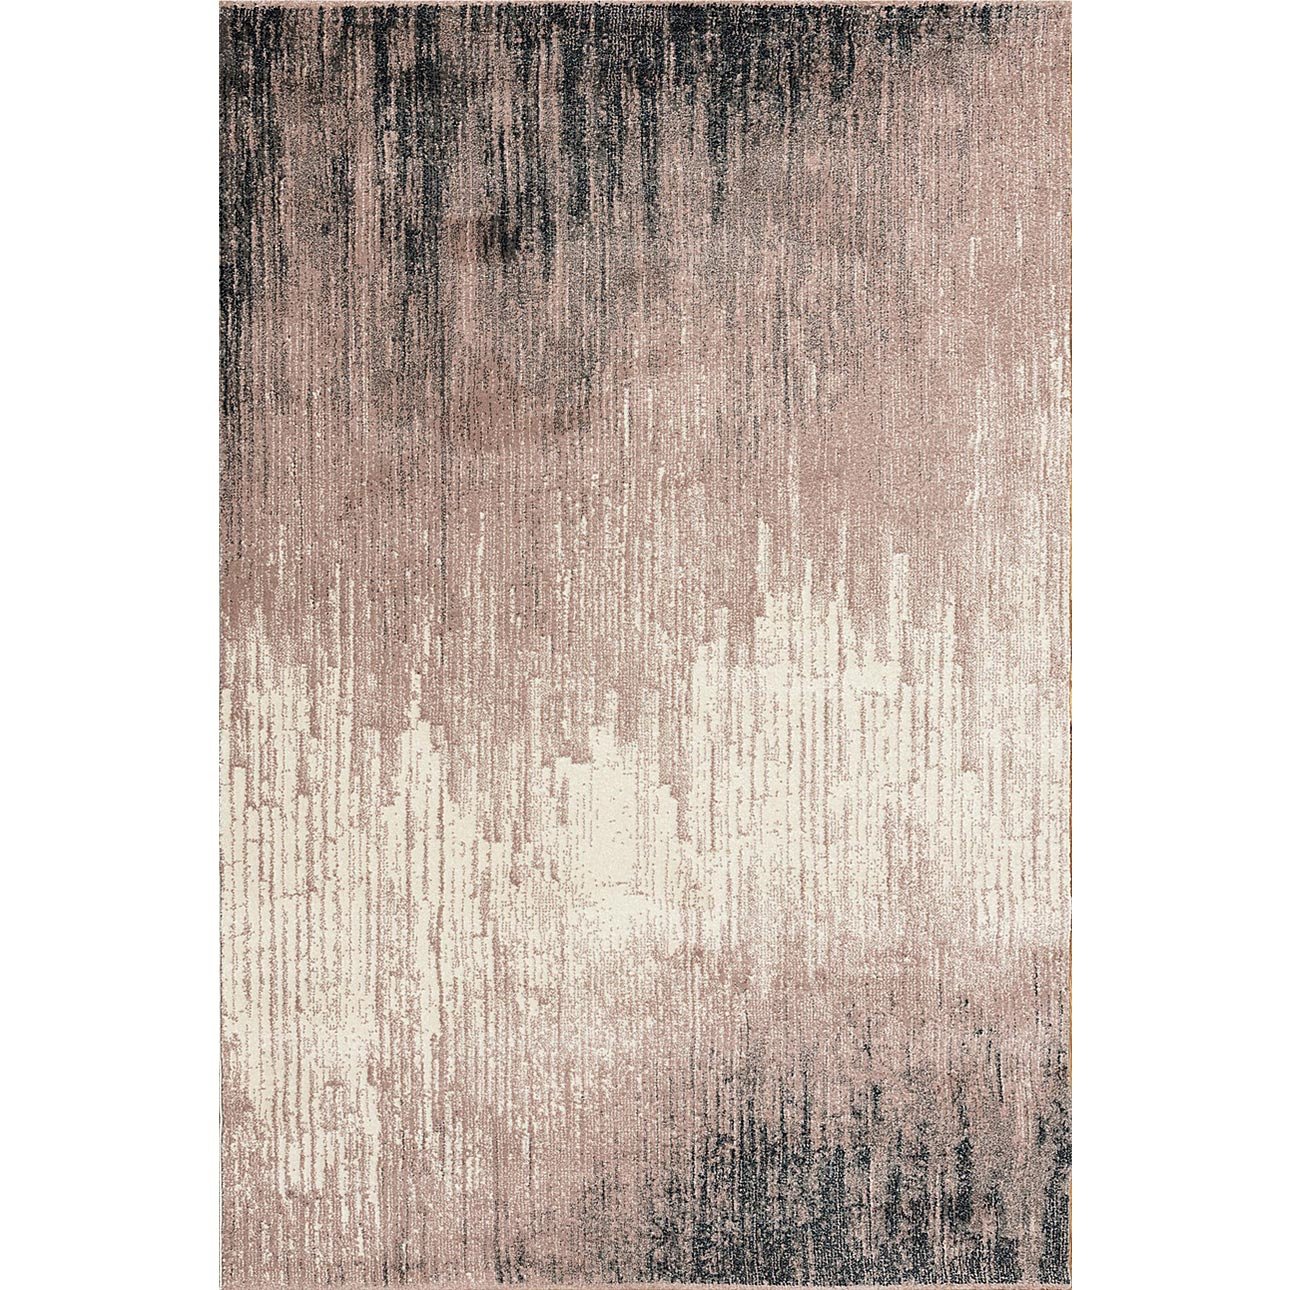 Koberec Sevilla paper white/dusty rose 160x230cm